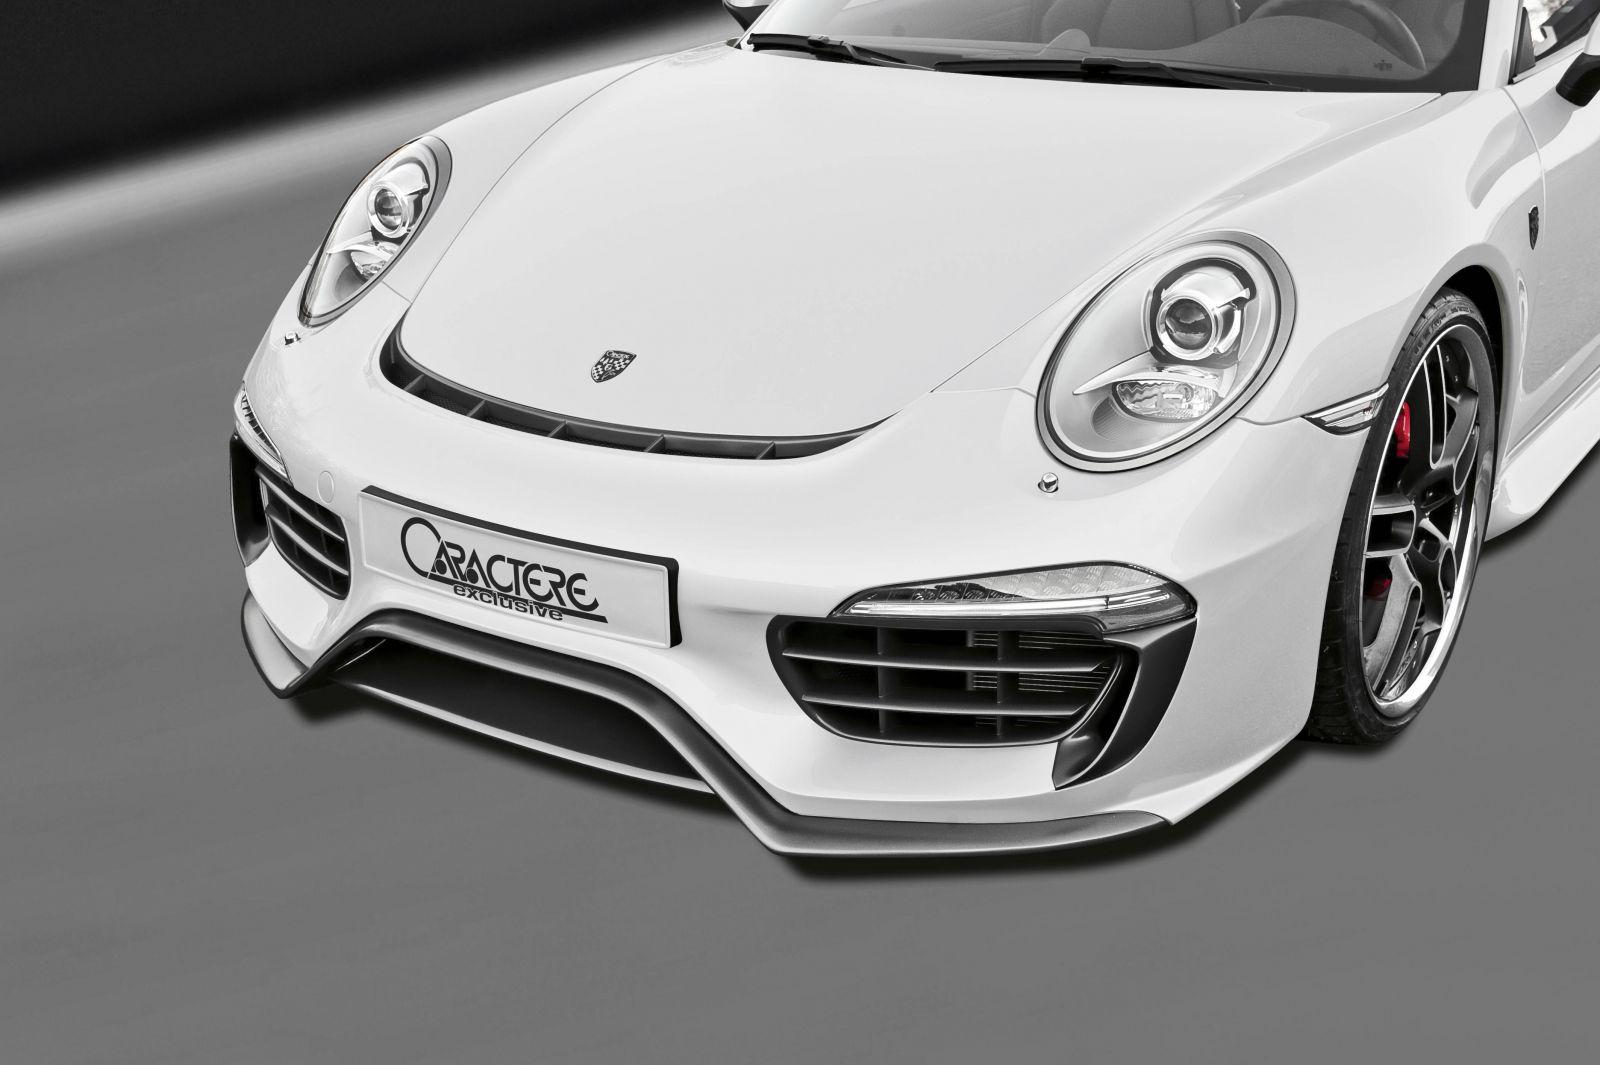 Caractere Exclusive Porsche 911 Cabriolet 01